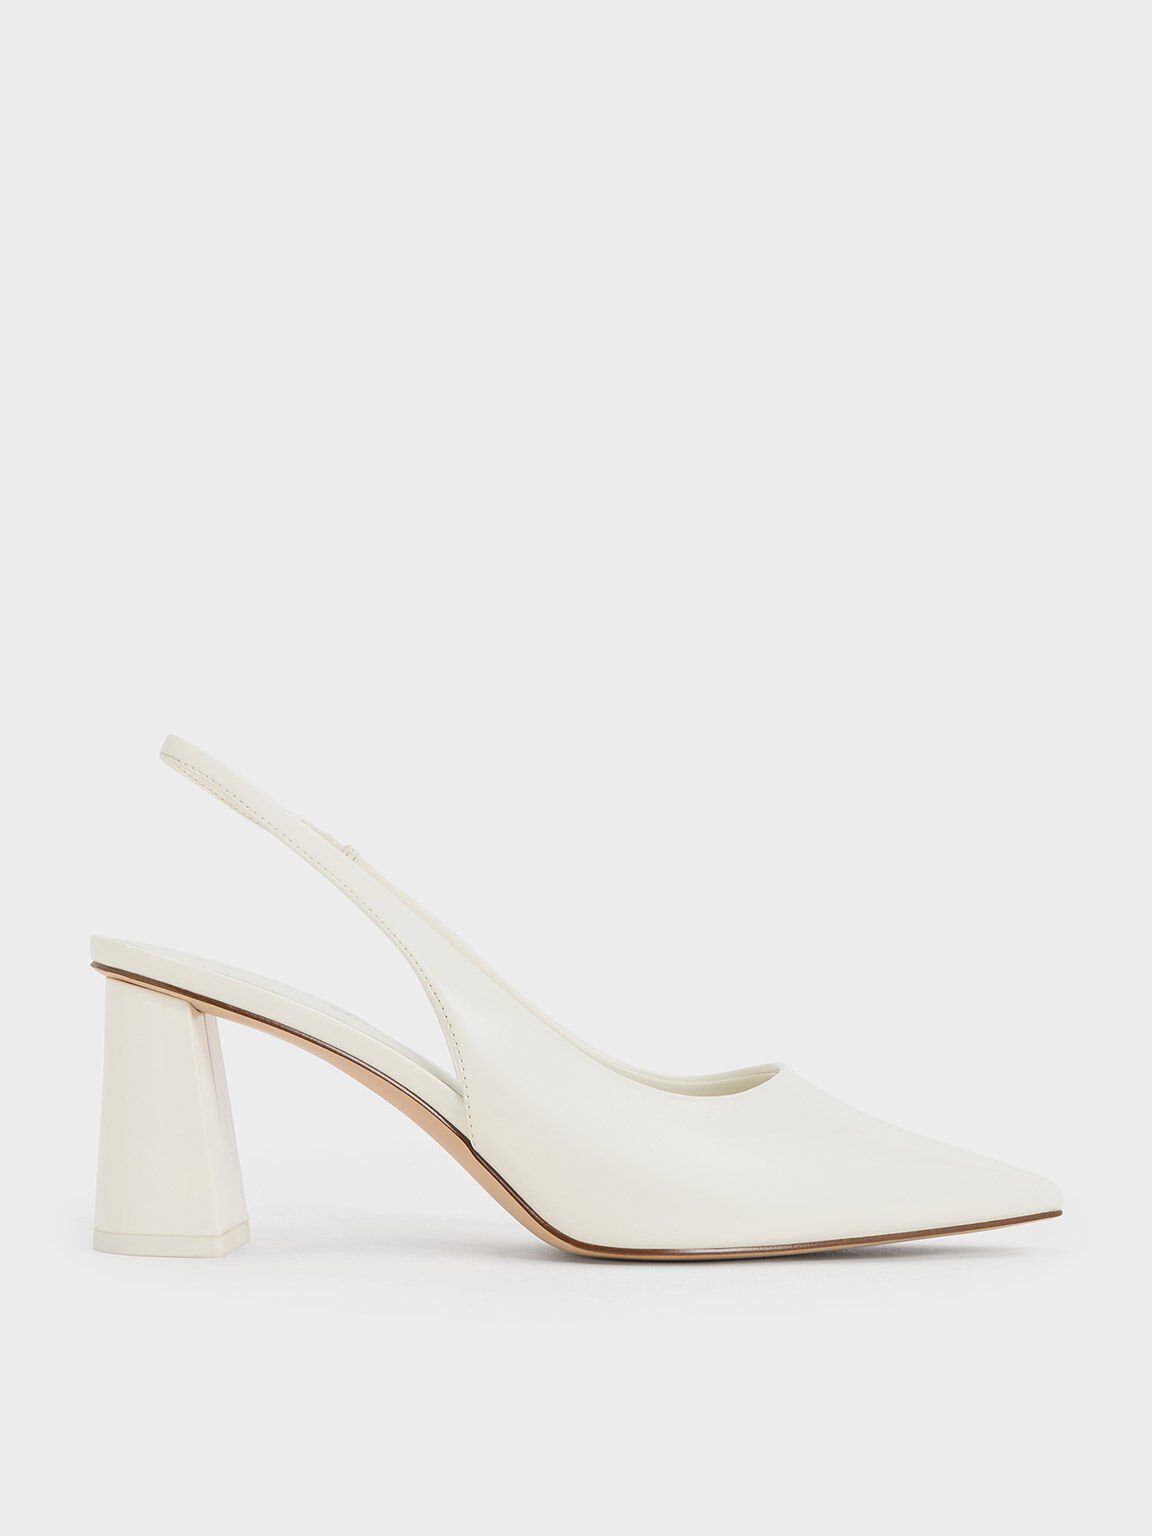 White Heels | White Block, Platform & Strappy High Heels | ASOS